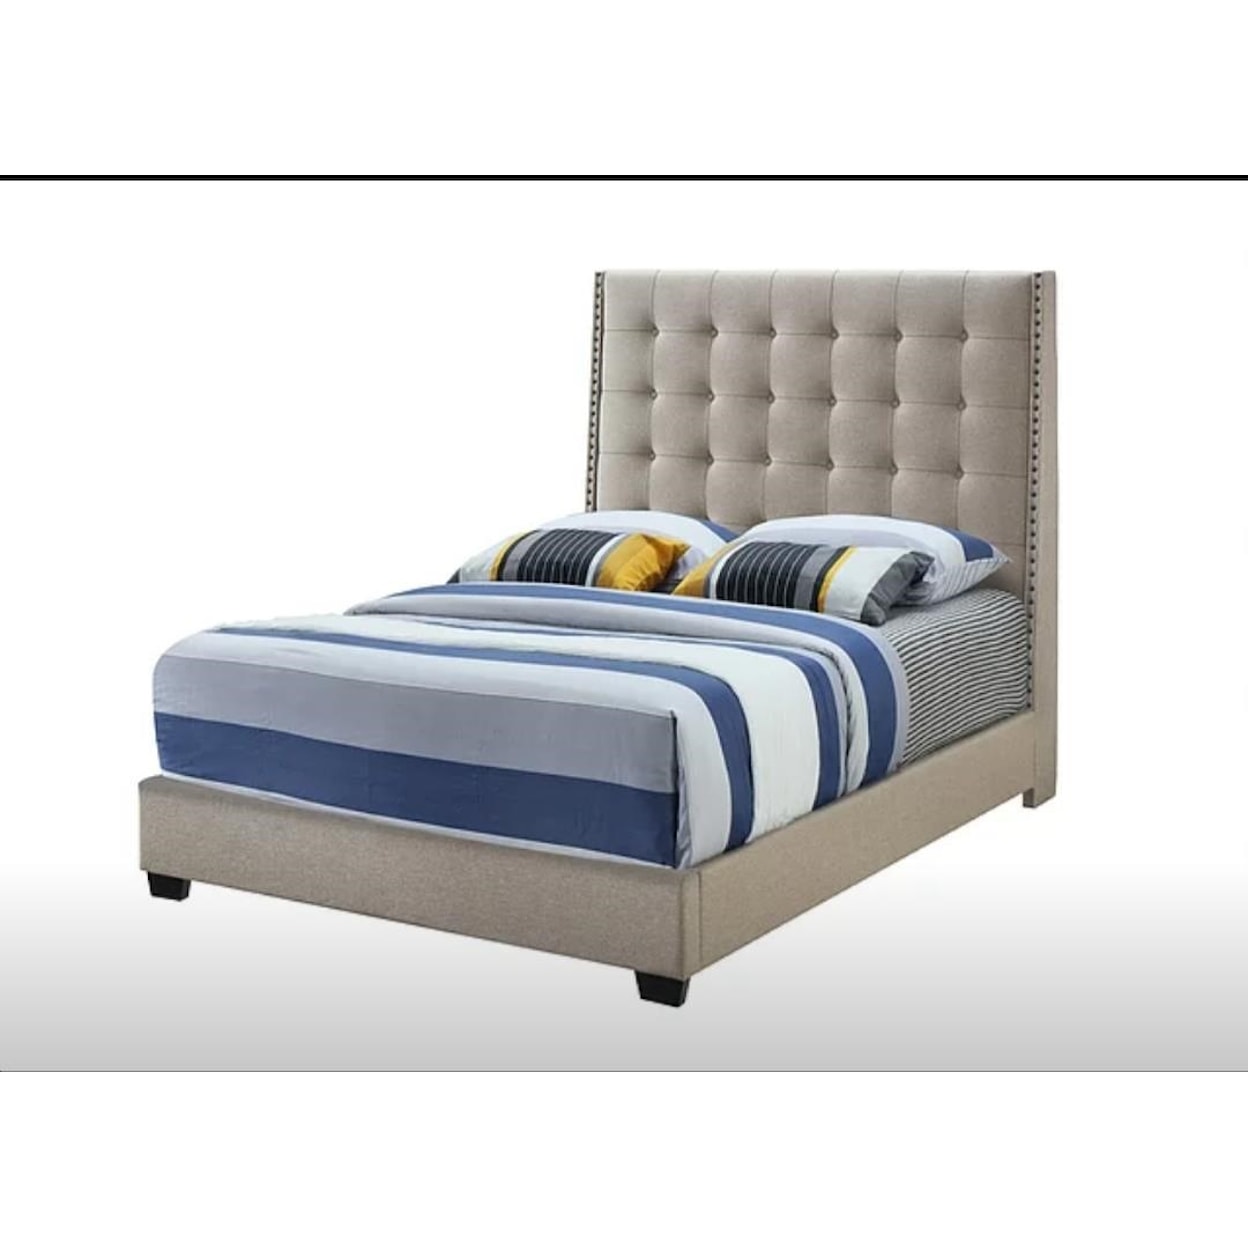 Lacey Furniture Regency Oat King Bed